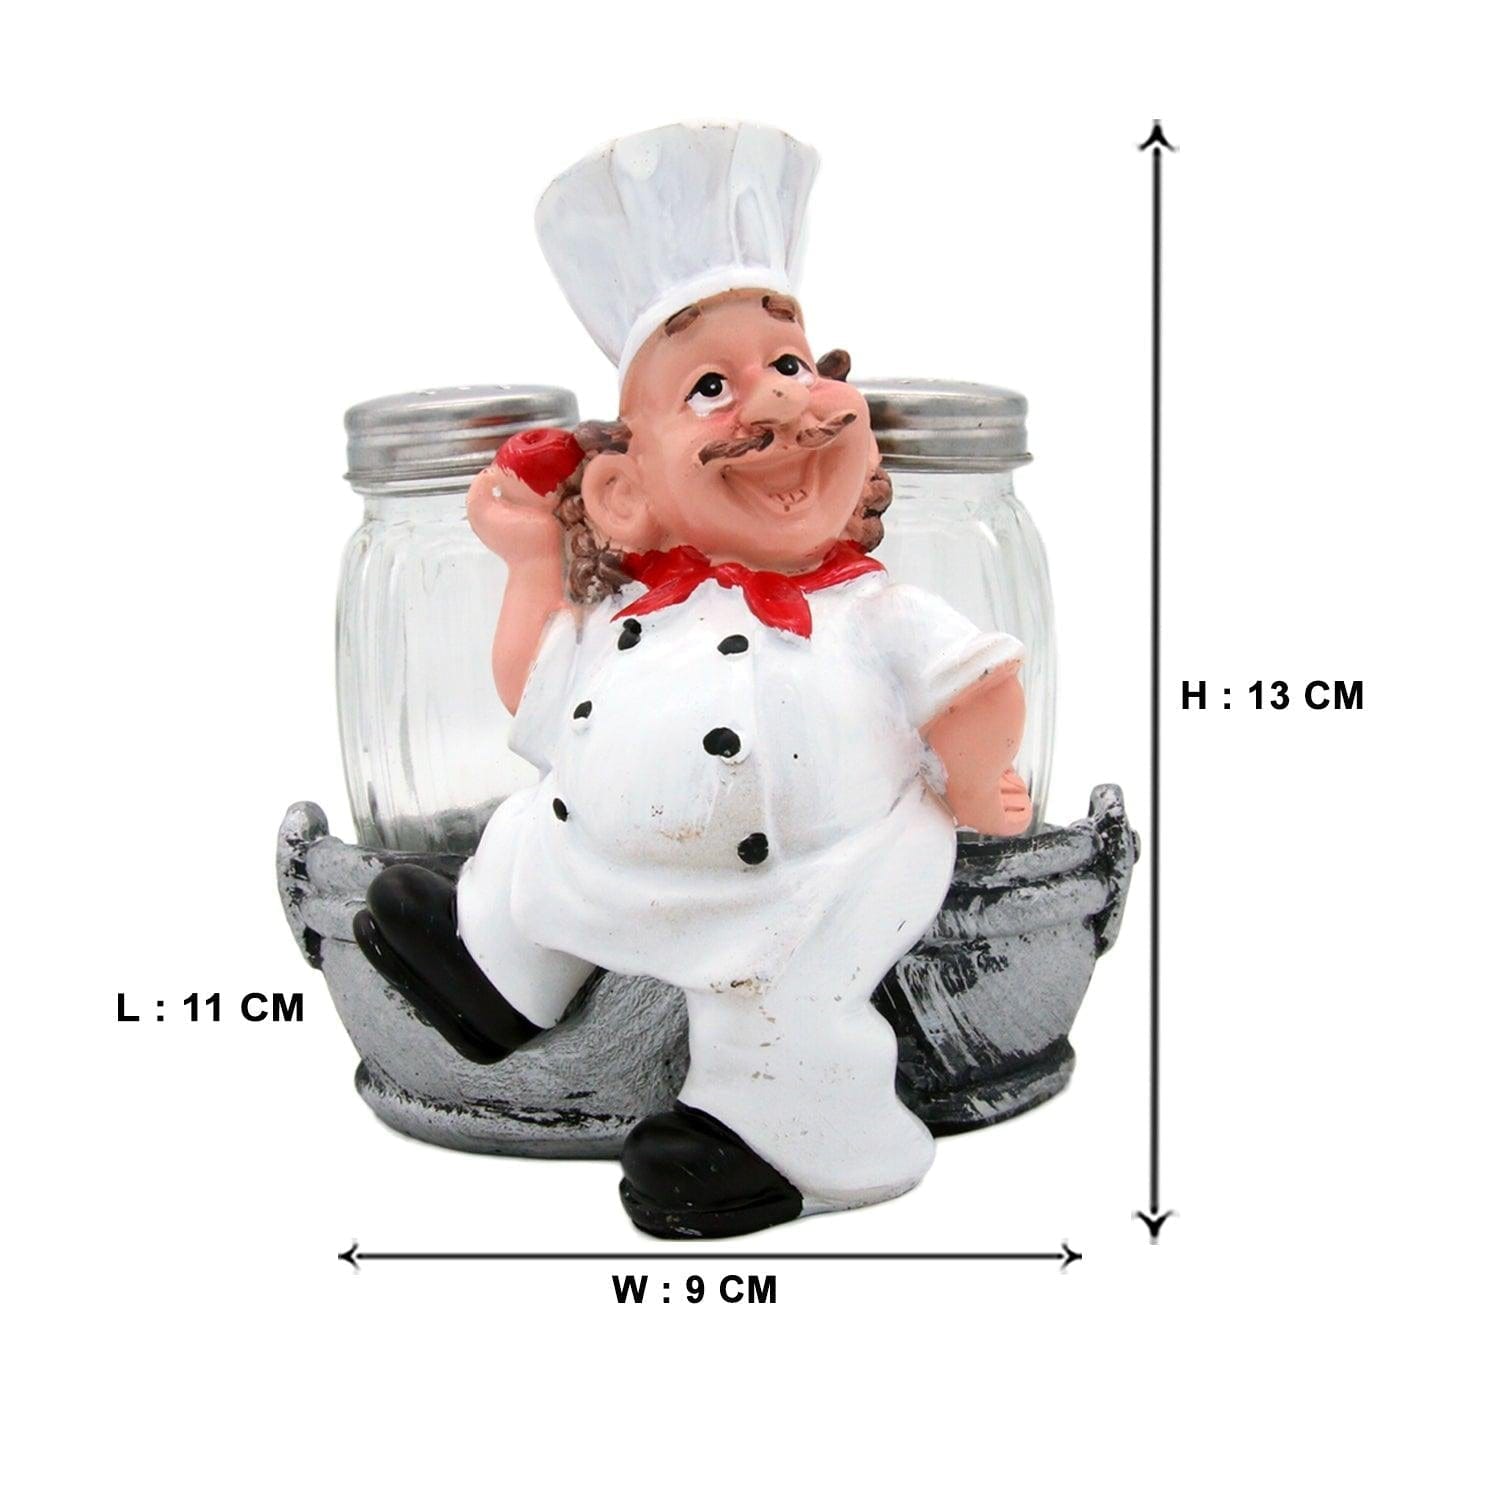 Foodie Chef Figurine Resin Salt & Pepper Shakers in Silver Basket Holder Set